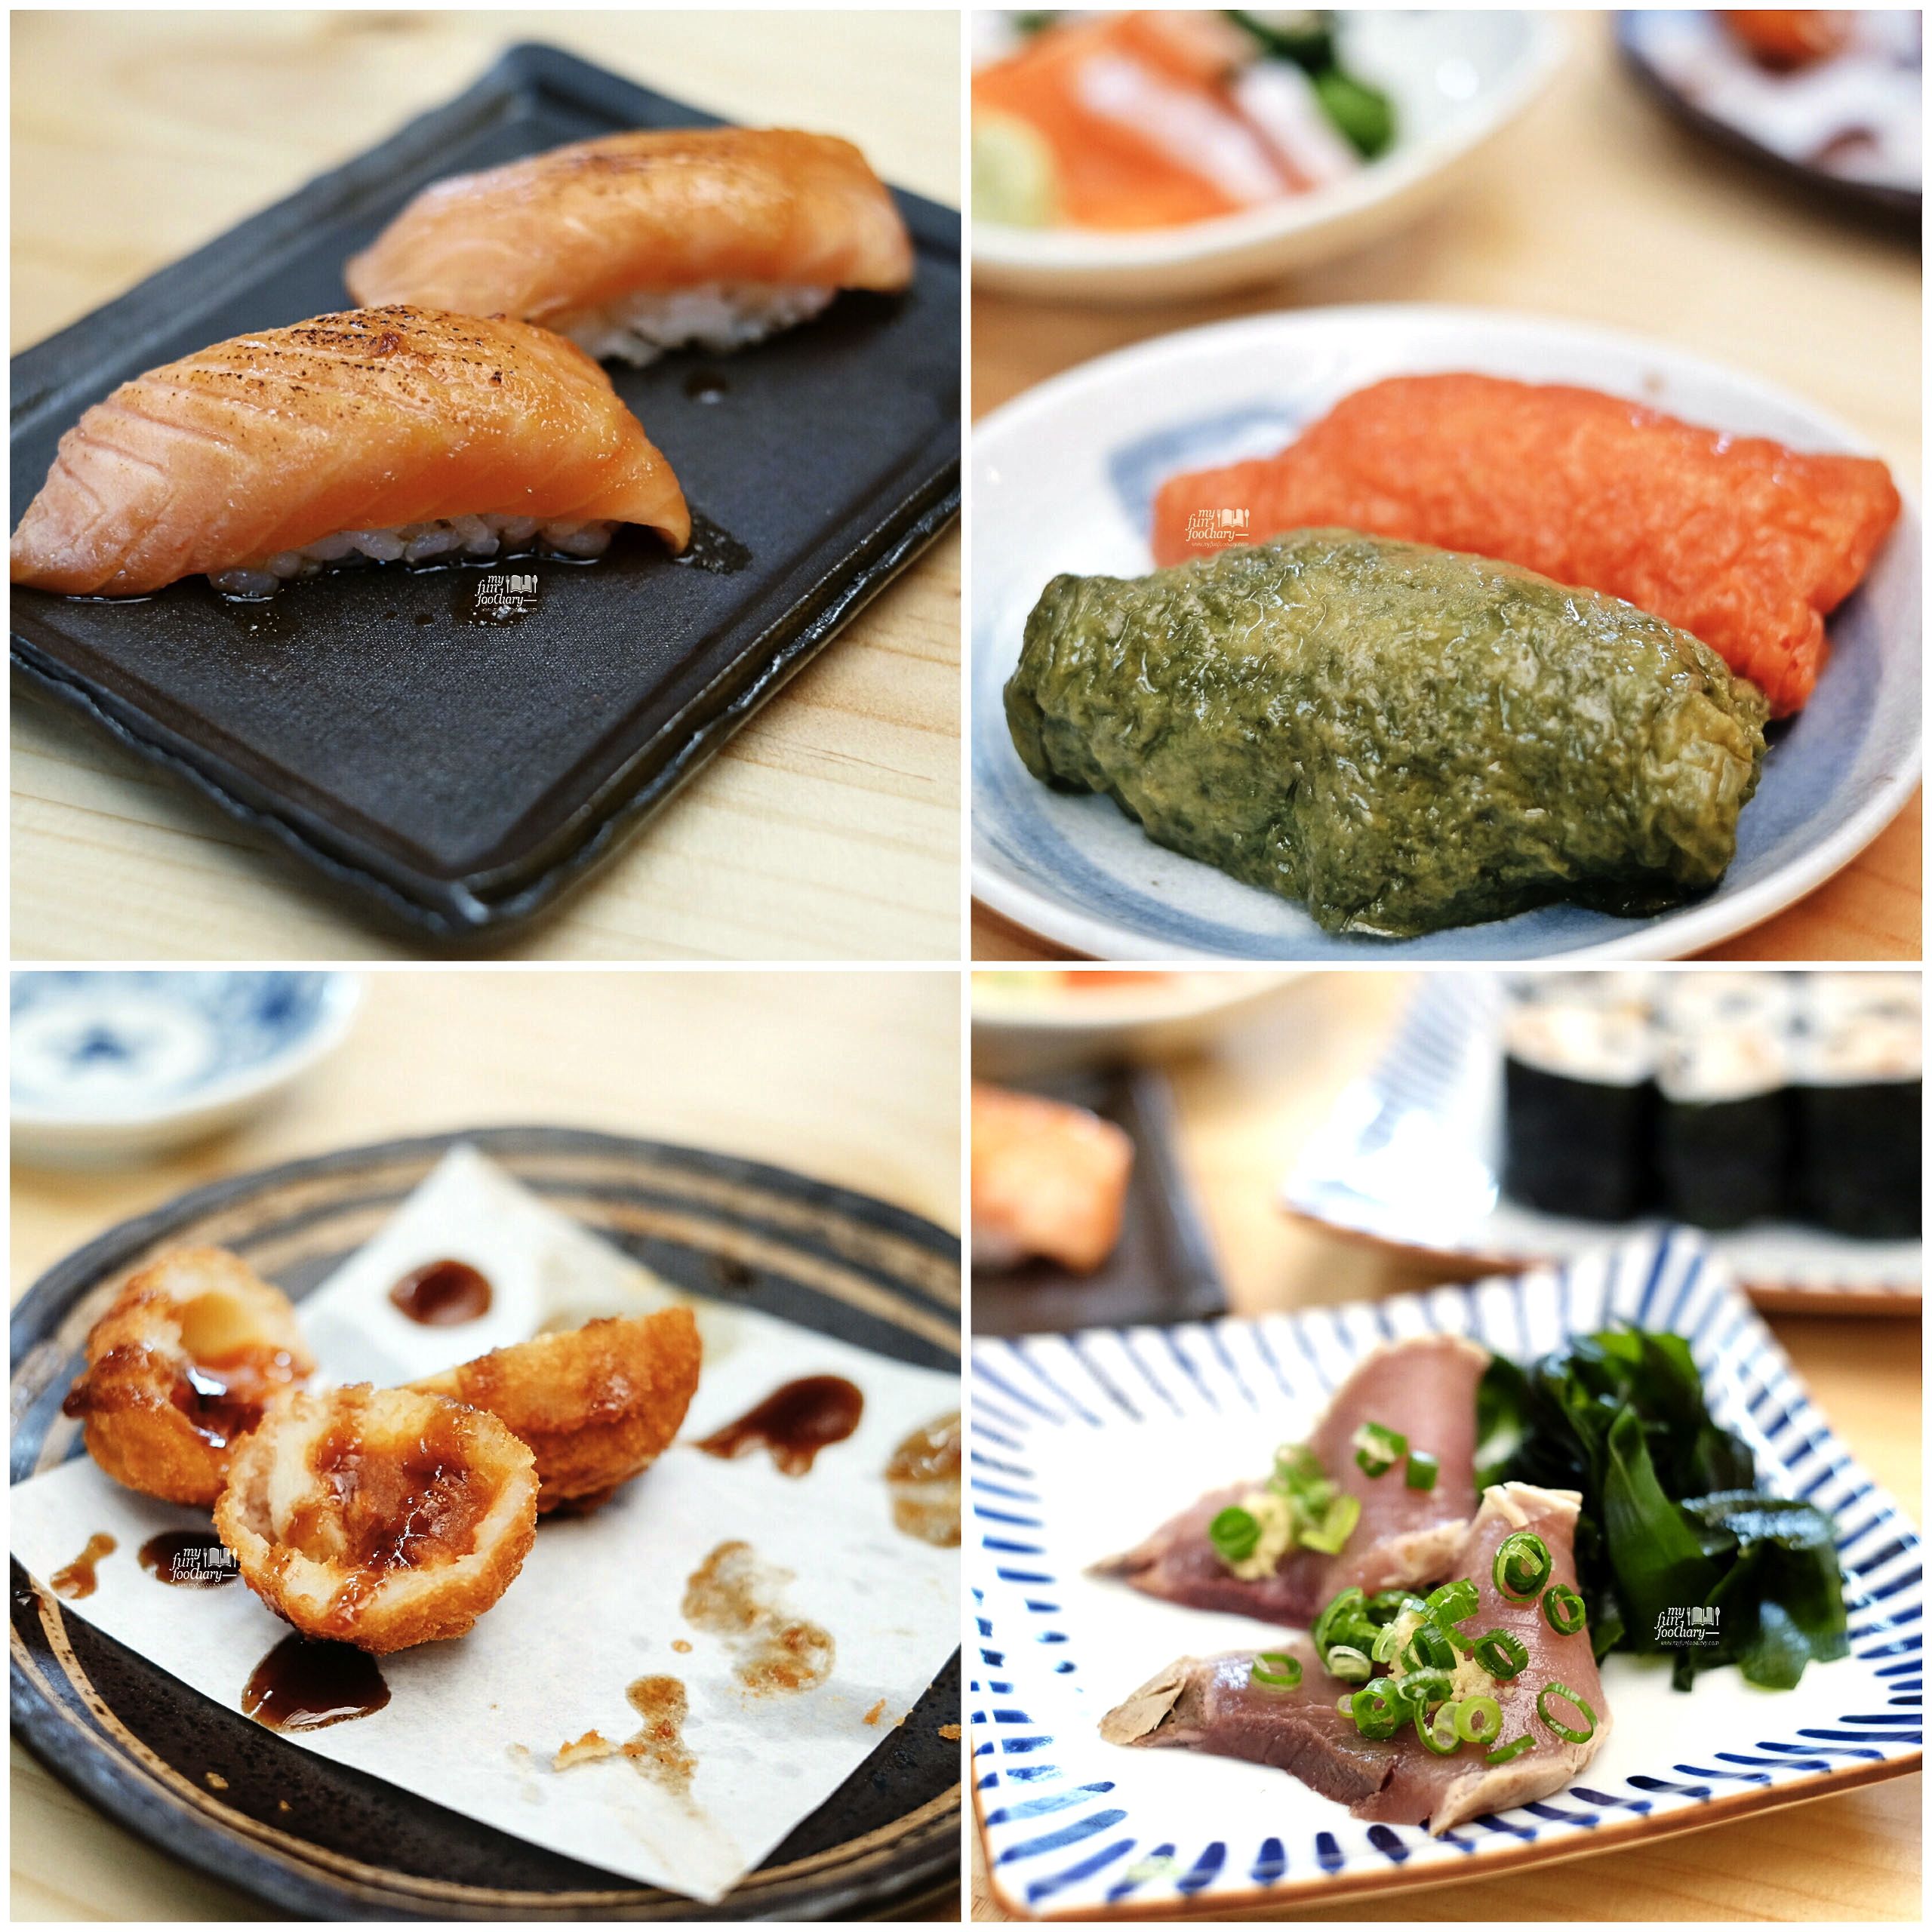 Salmon Aburi Sushi - Ocha Inari & Apple Inari - Katsuo Tataki Sashimi - Potato Ball at Nama Sushi by Myfunfoodiaryedit